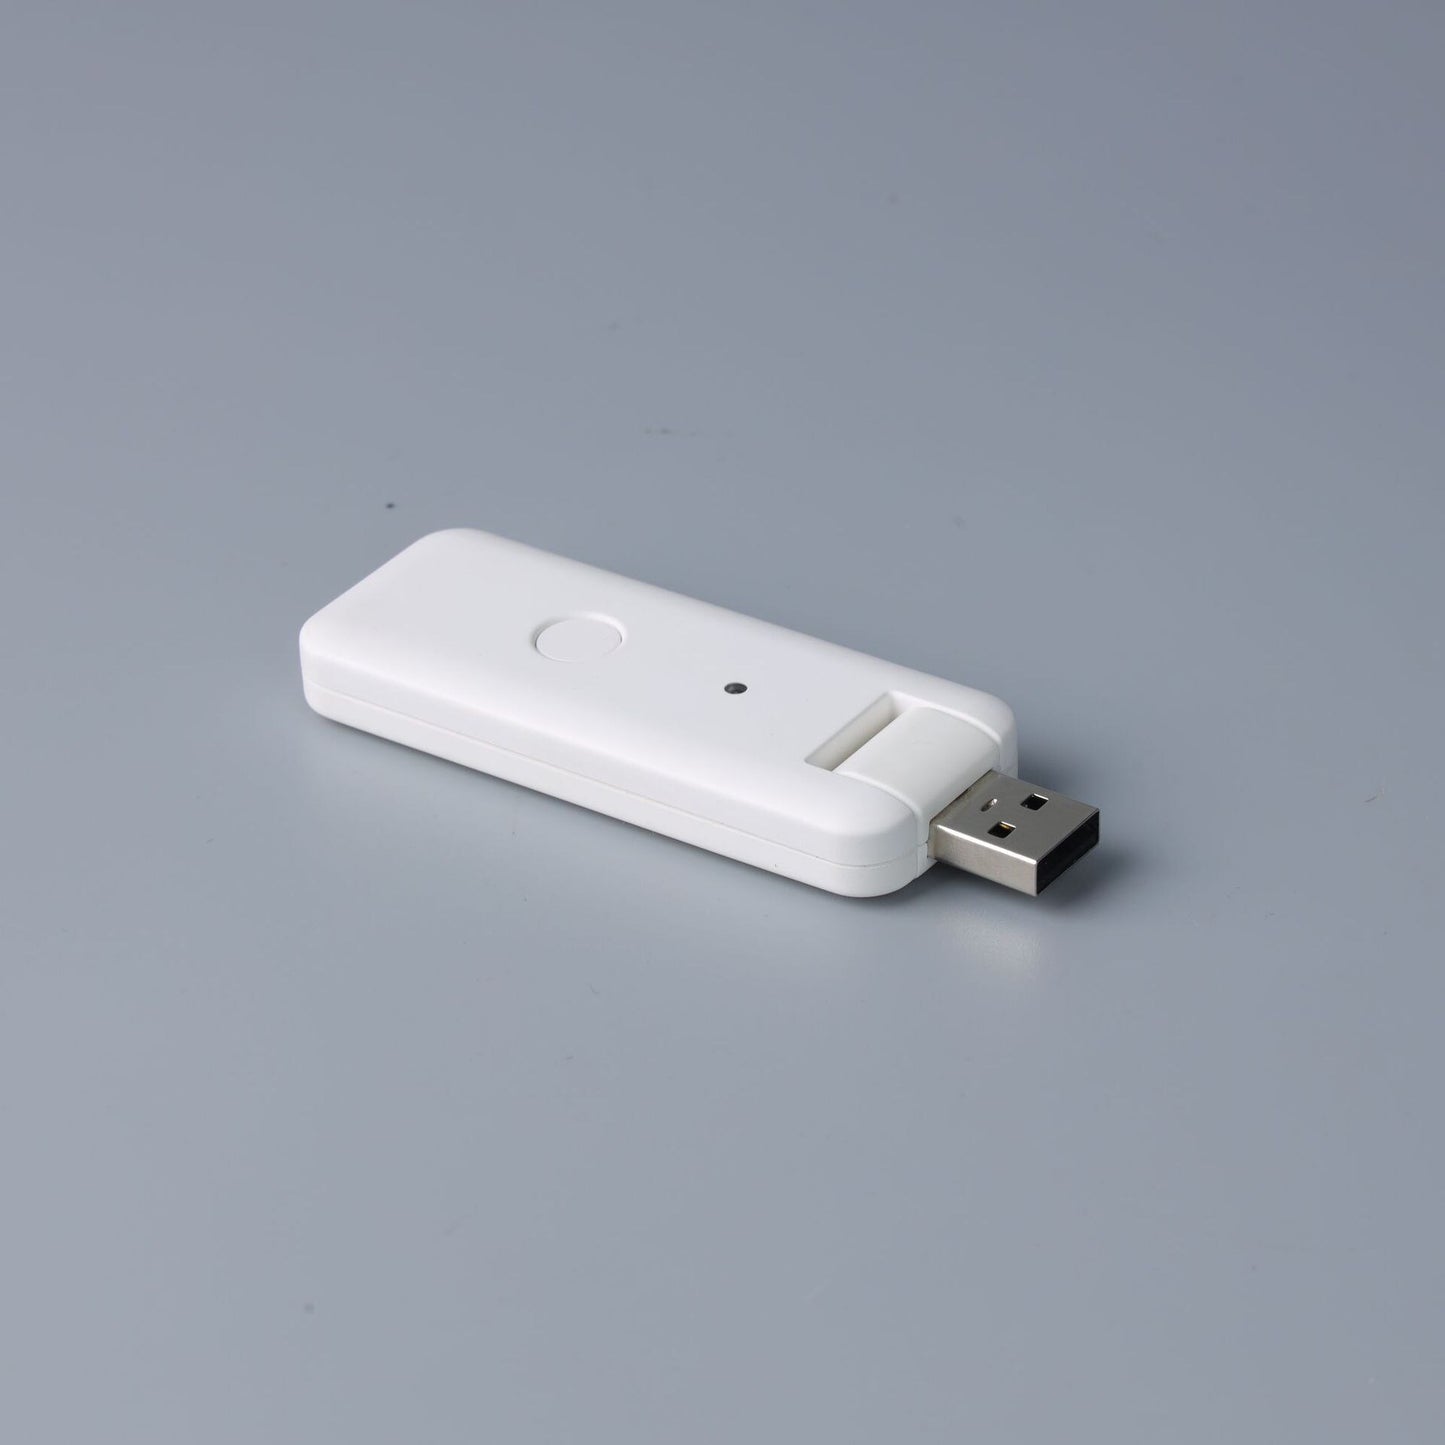 Zigbee USB Wireless Hub Smart Life Home Control Center